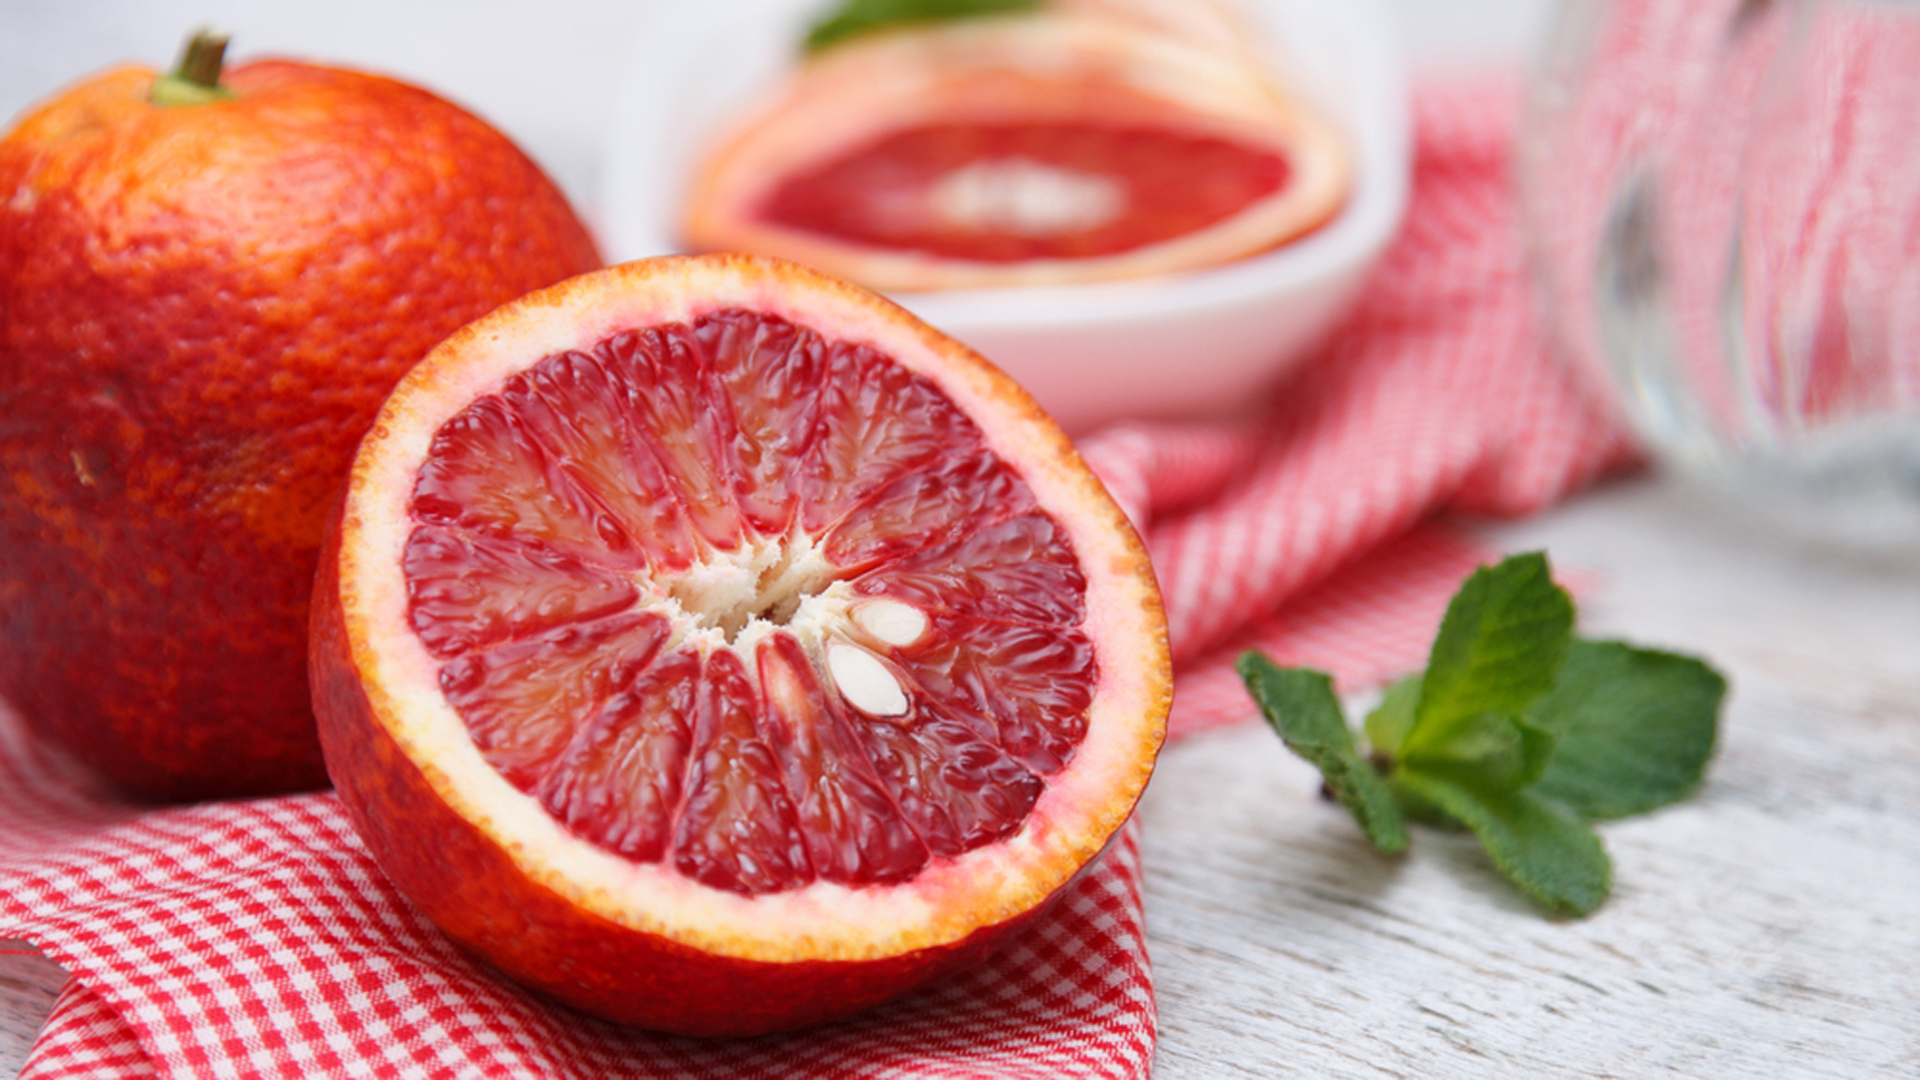 El pomelo, o toronja, ayuda a prevenir varias enfermedades (Shutterstock)